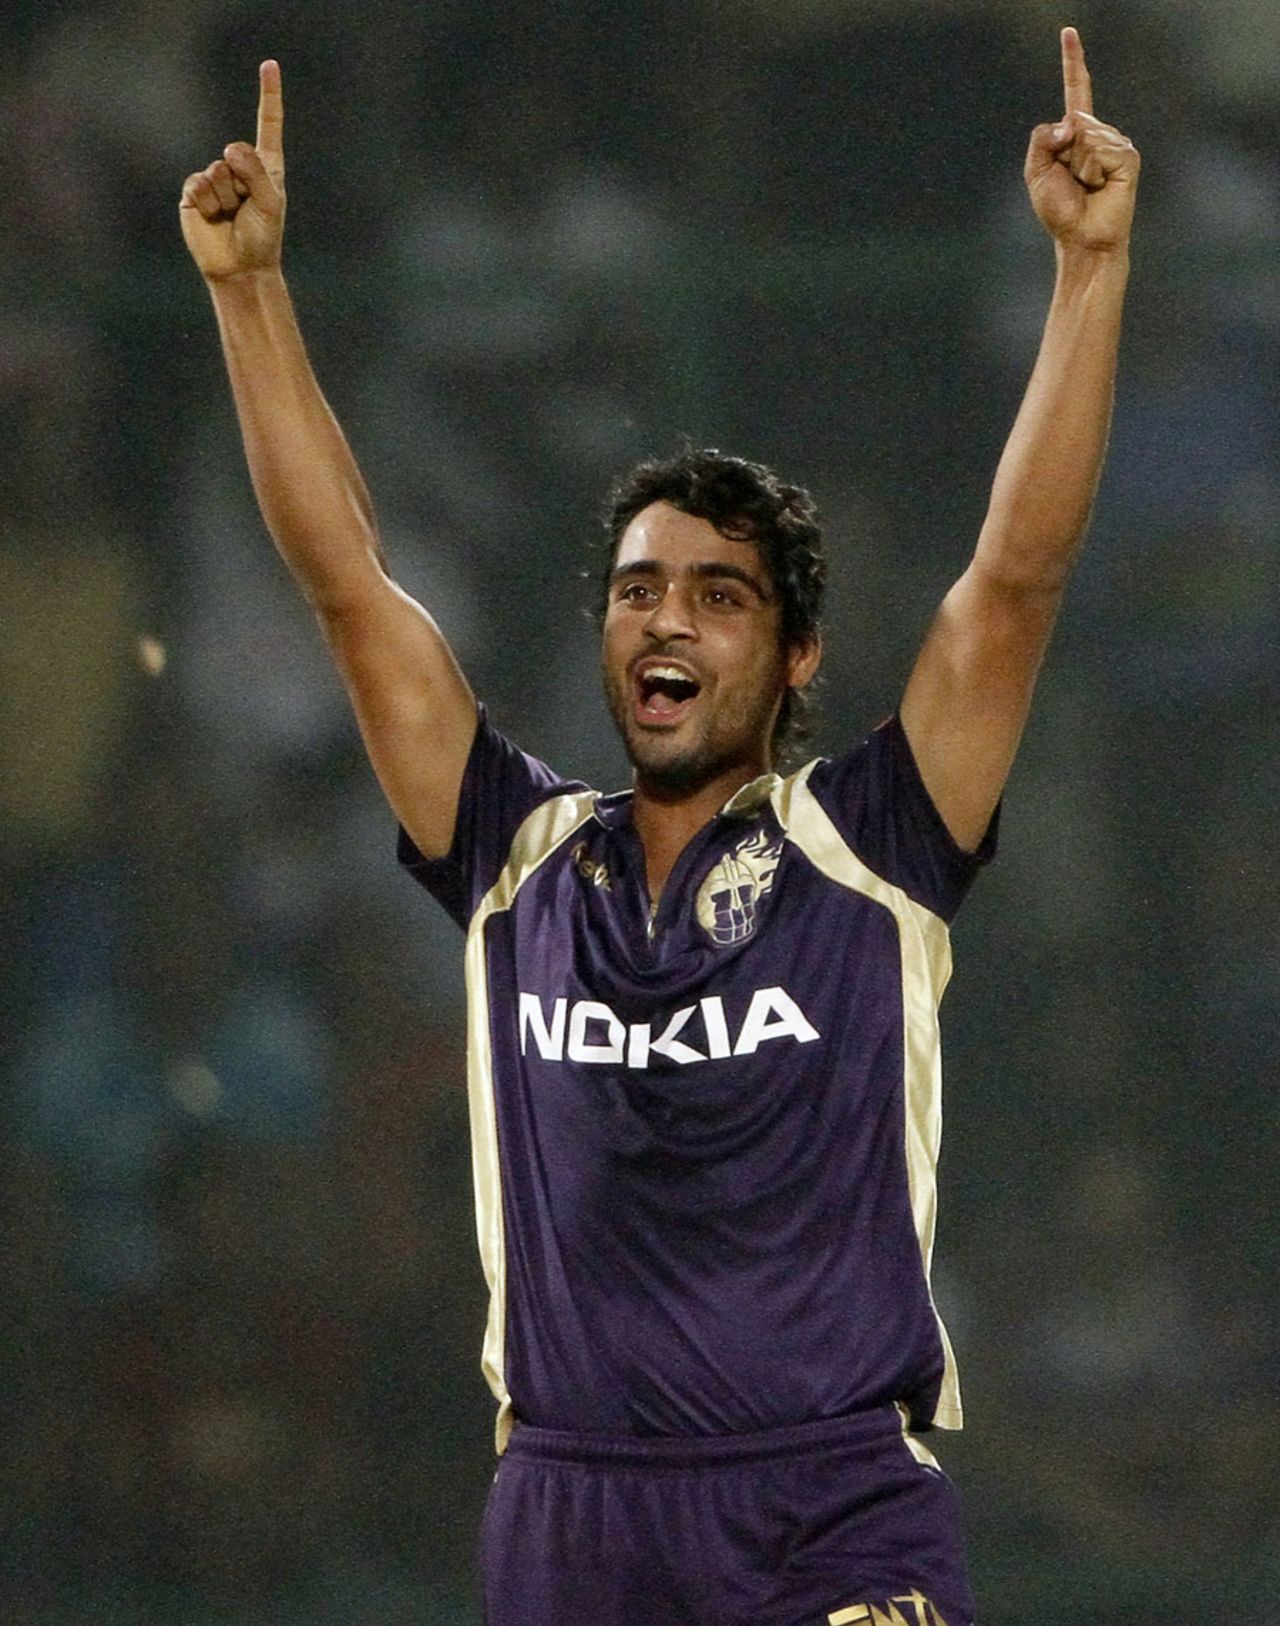 Iqbal Abdulla gets the wicket of James Hopes, Delhi Daredevils v Kolkata Knight Riders, IPL 2011, Delhi, April 28, 2011